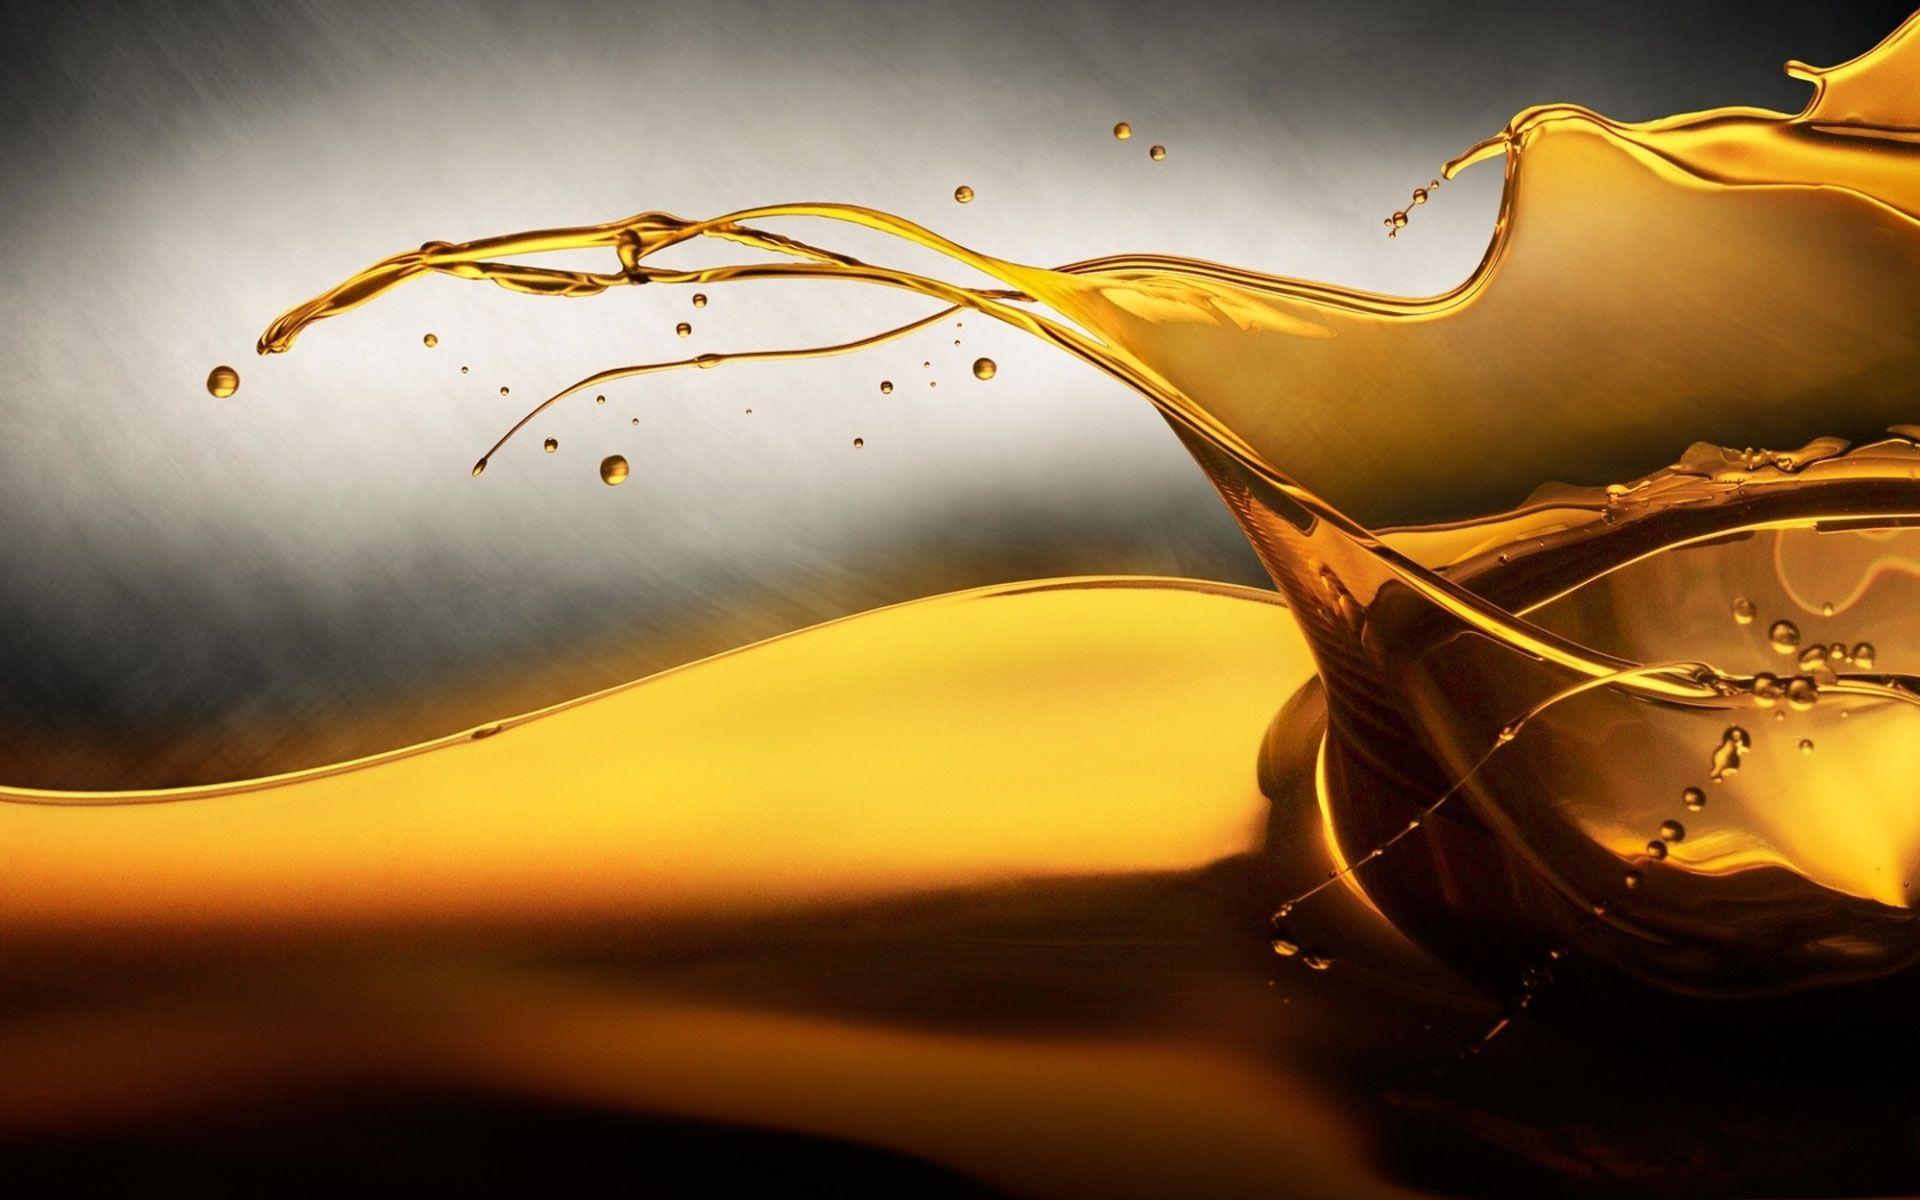 Oil, Splash, Gold wallpaper. Golden Touch. Essential